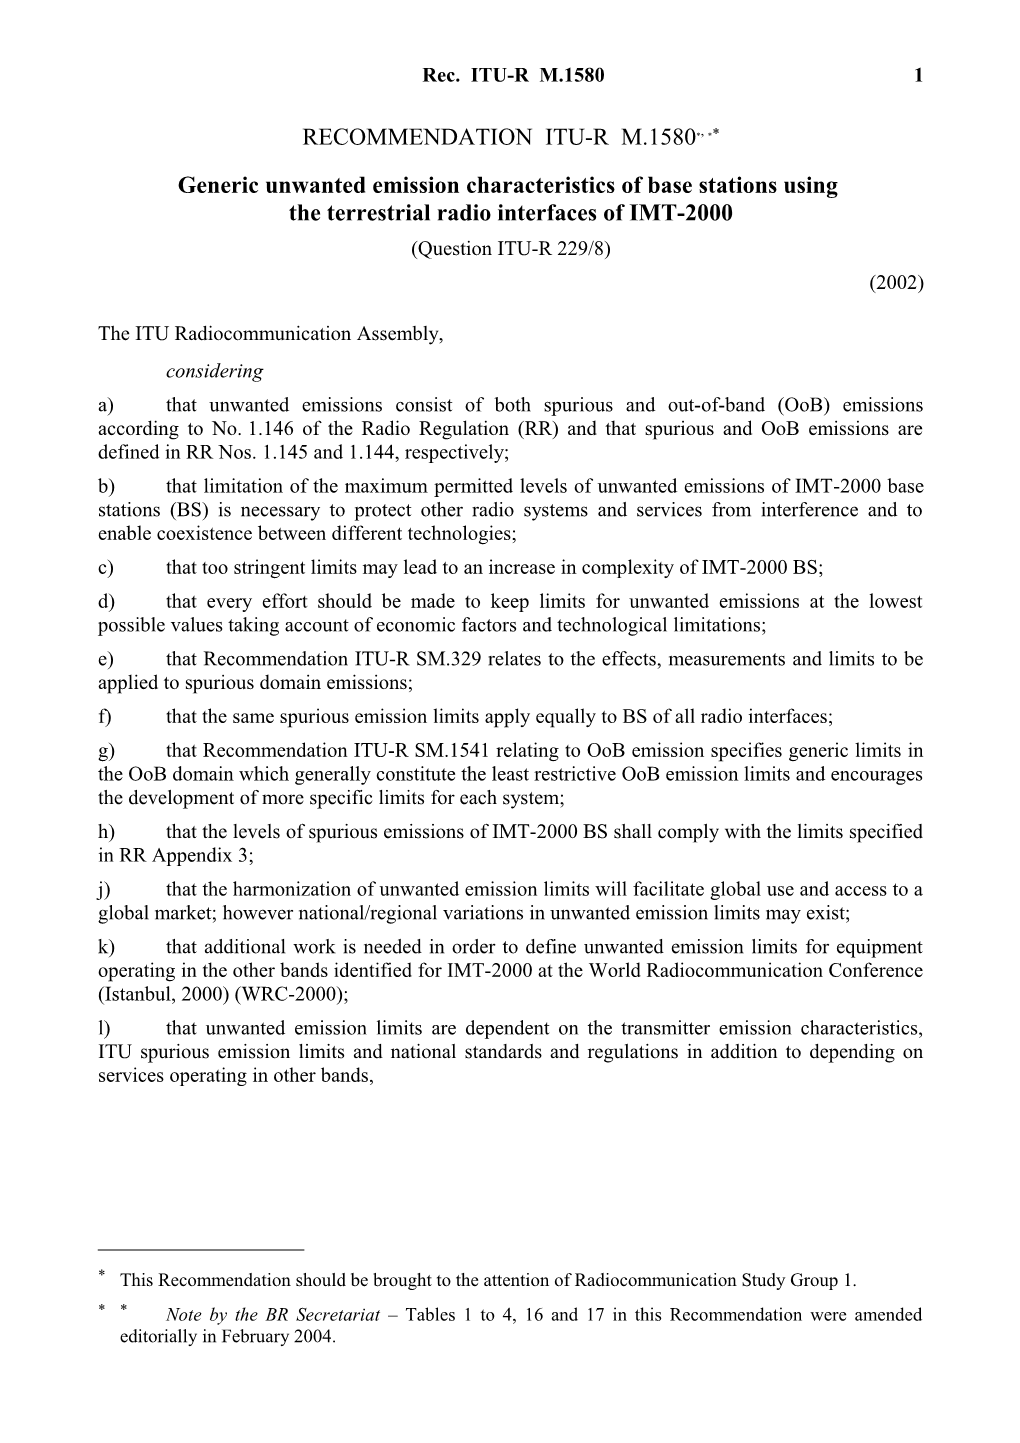 RECOMMENDATION ITU-R M.1580*, - Generic Unwanted Emission Characteristics of Base Stations